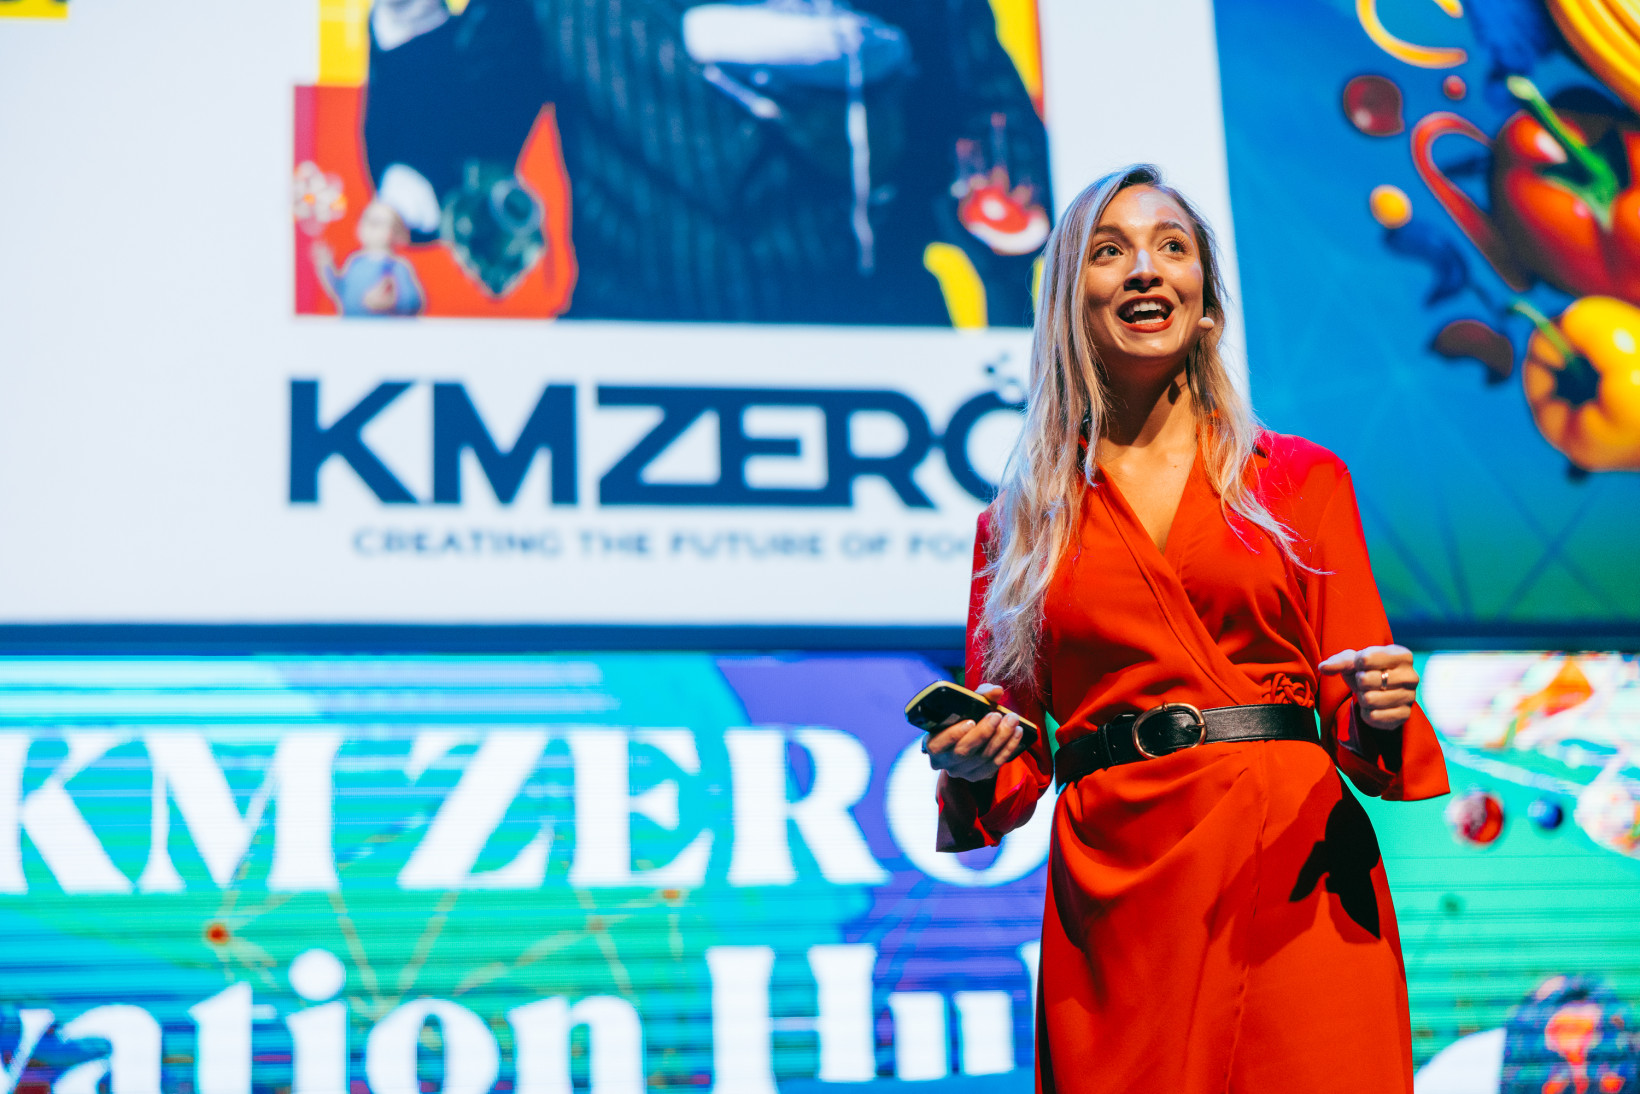 Beatriz Lozano in front of presentation screen on stage